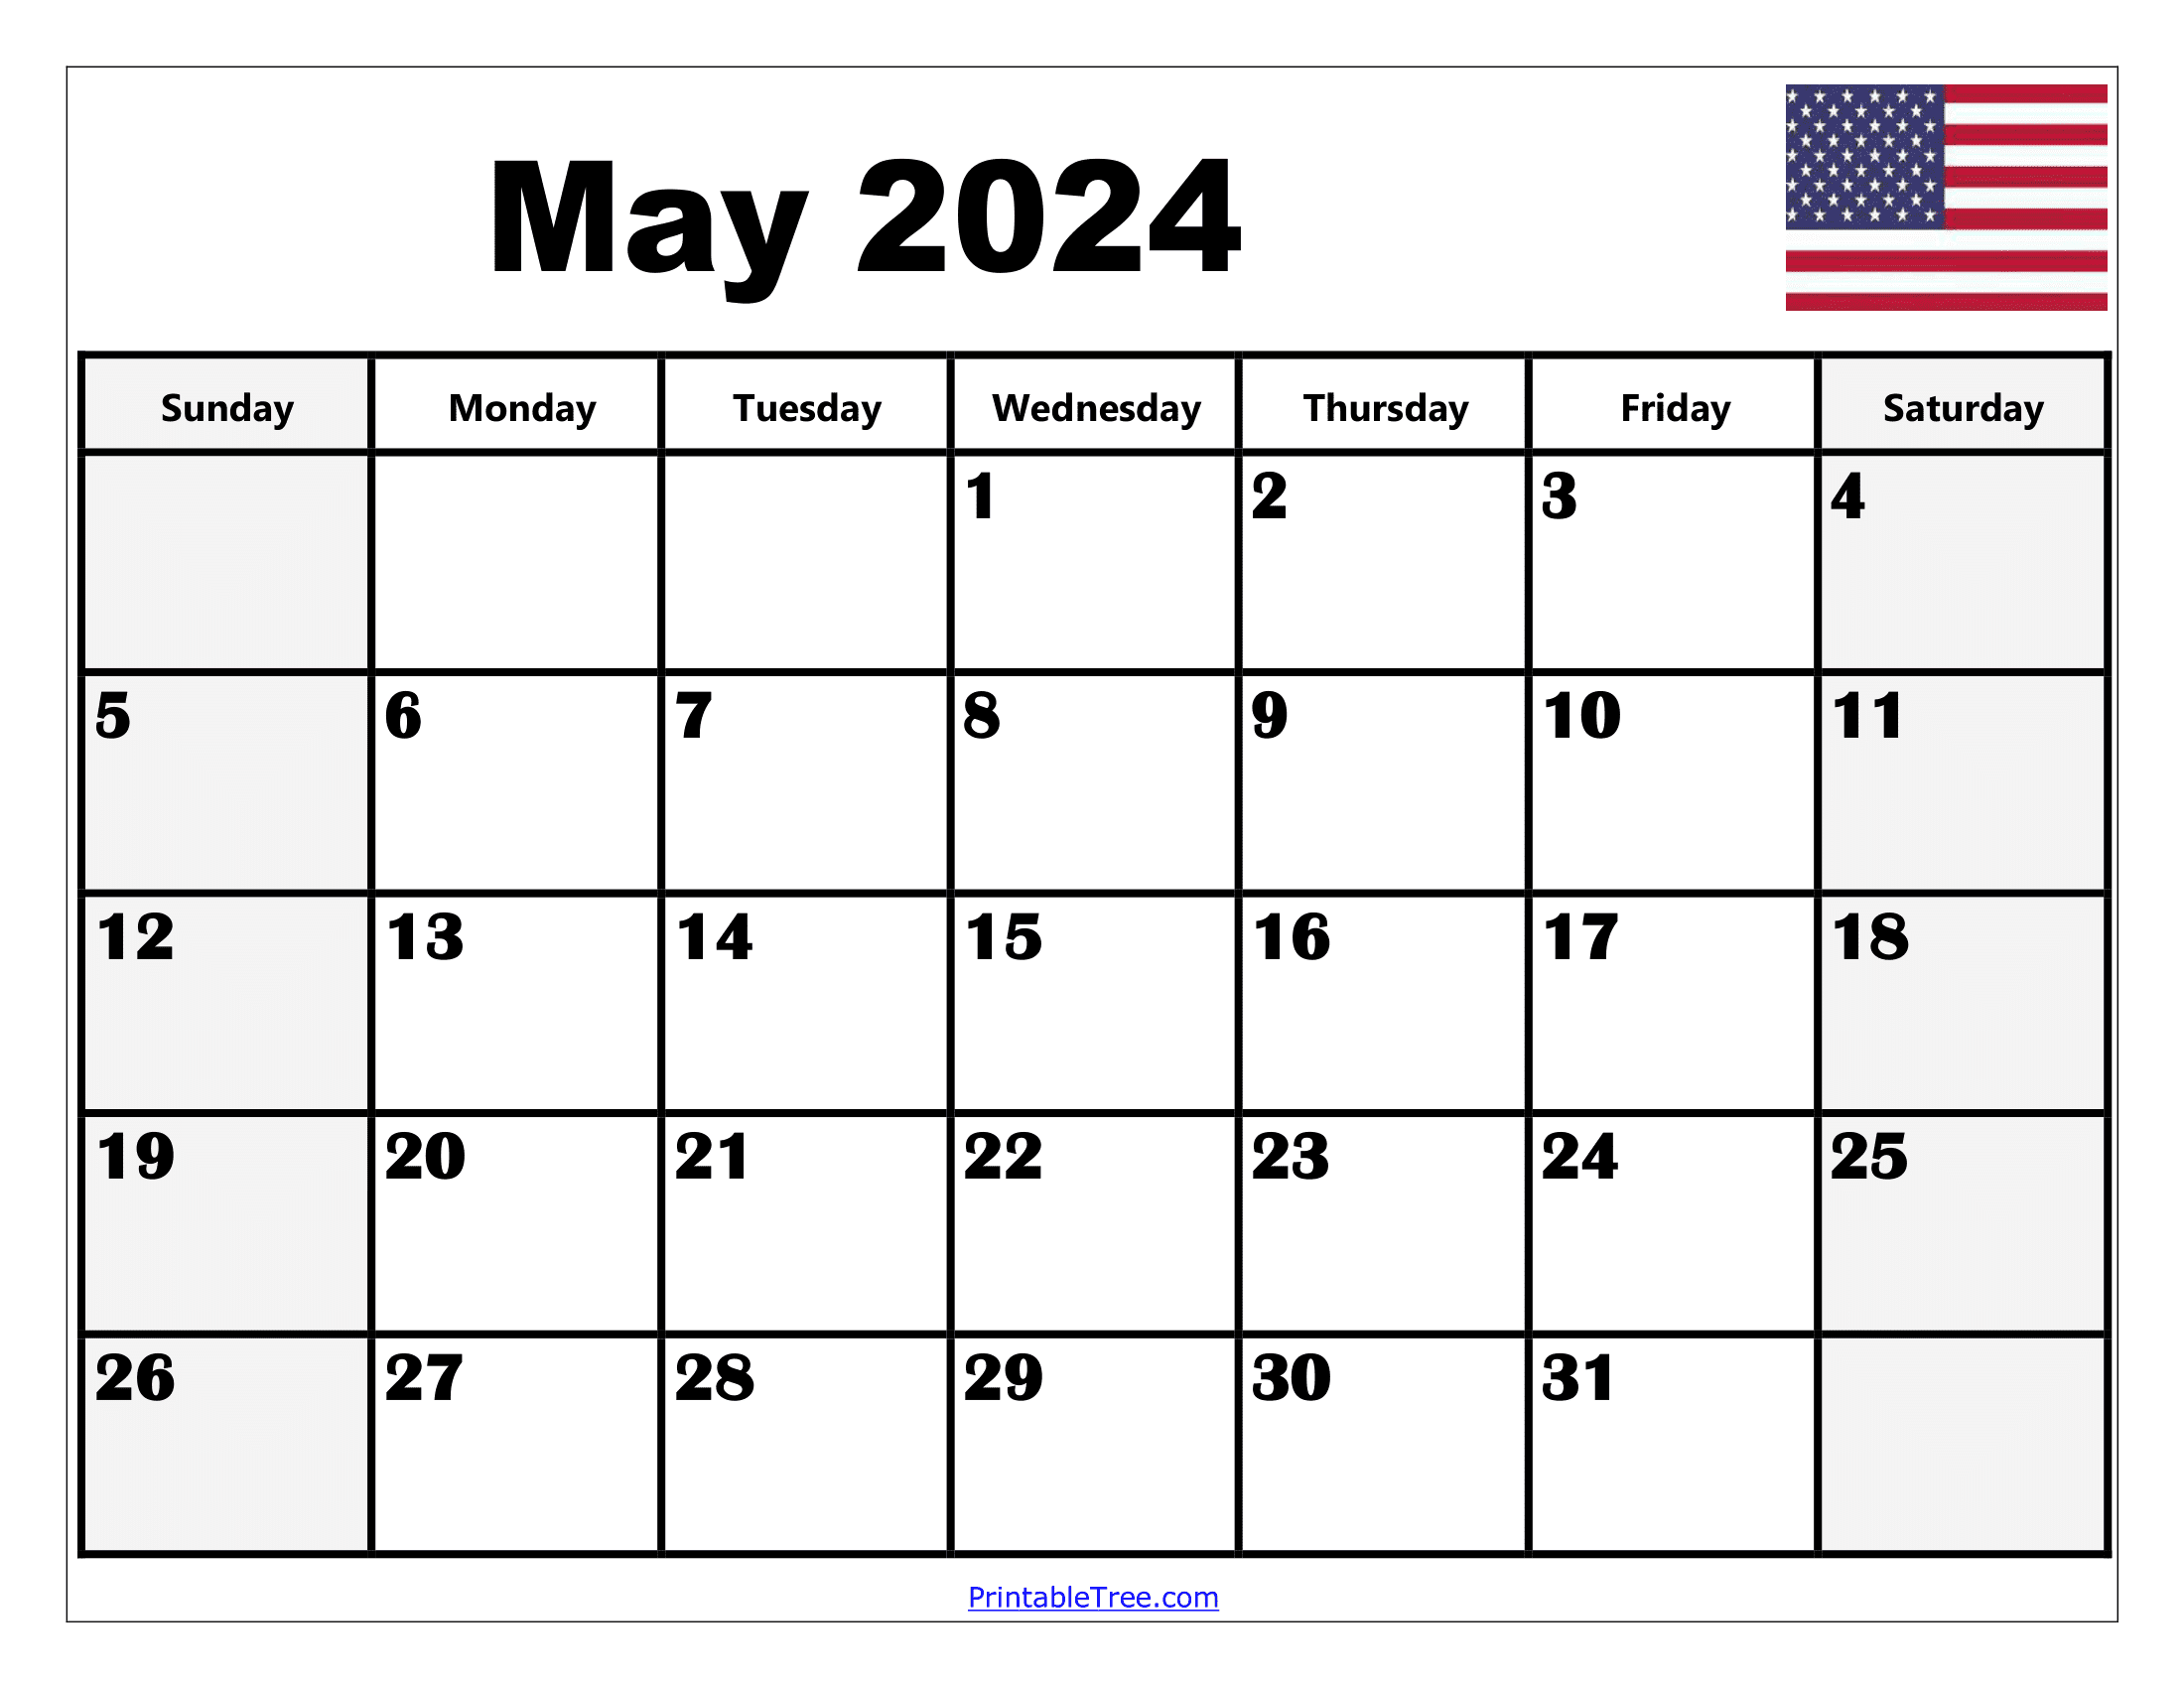 Blank May 2024 Calendar Printable Pdf Templates With Holidays within Free Printable Calendar 2024 May June July August